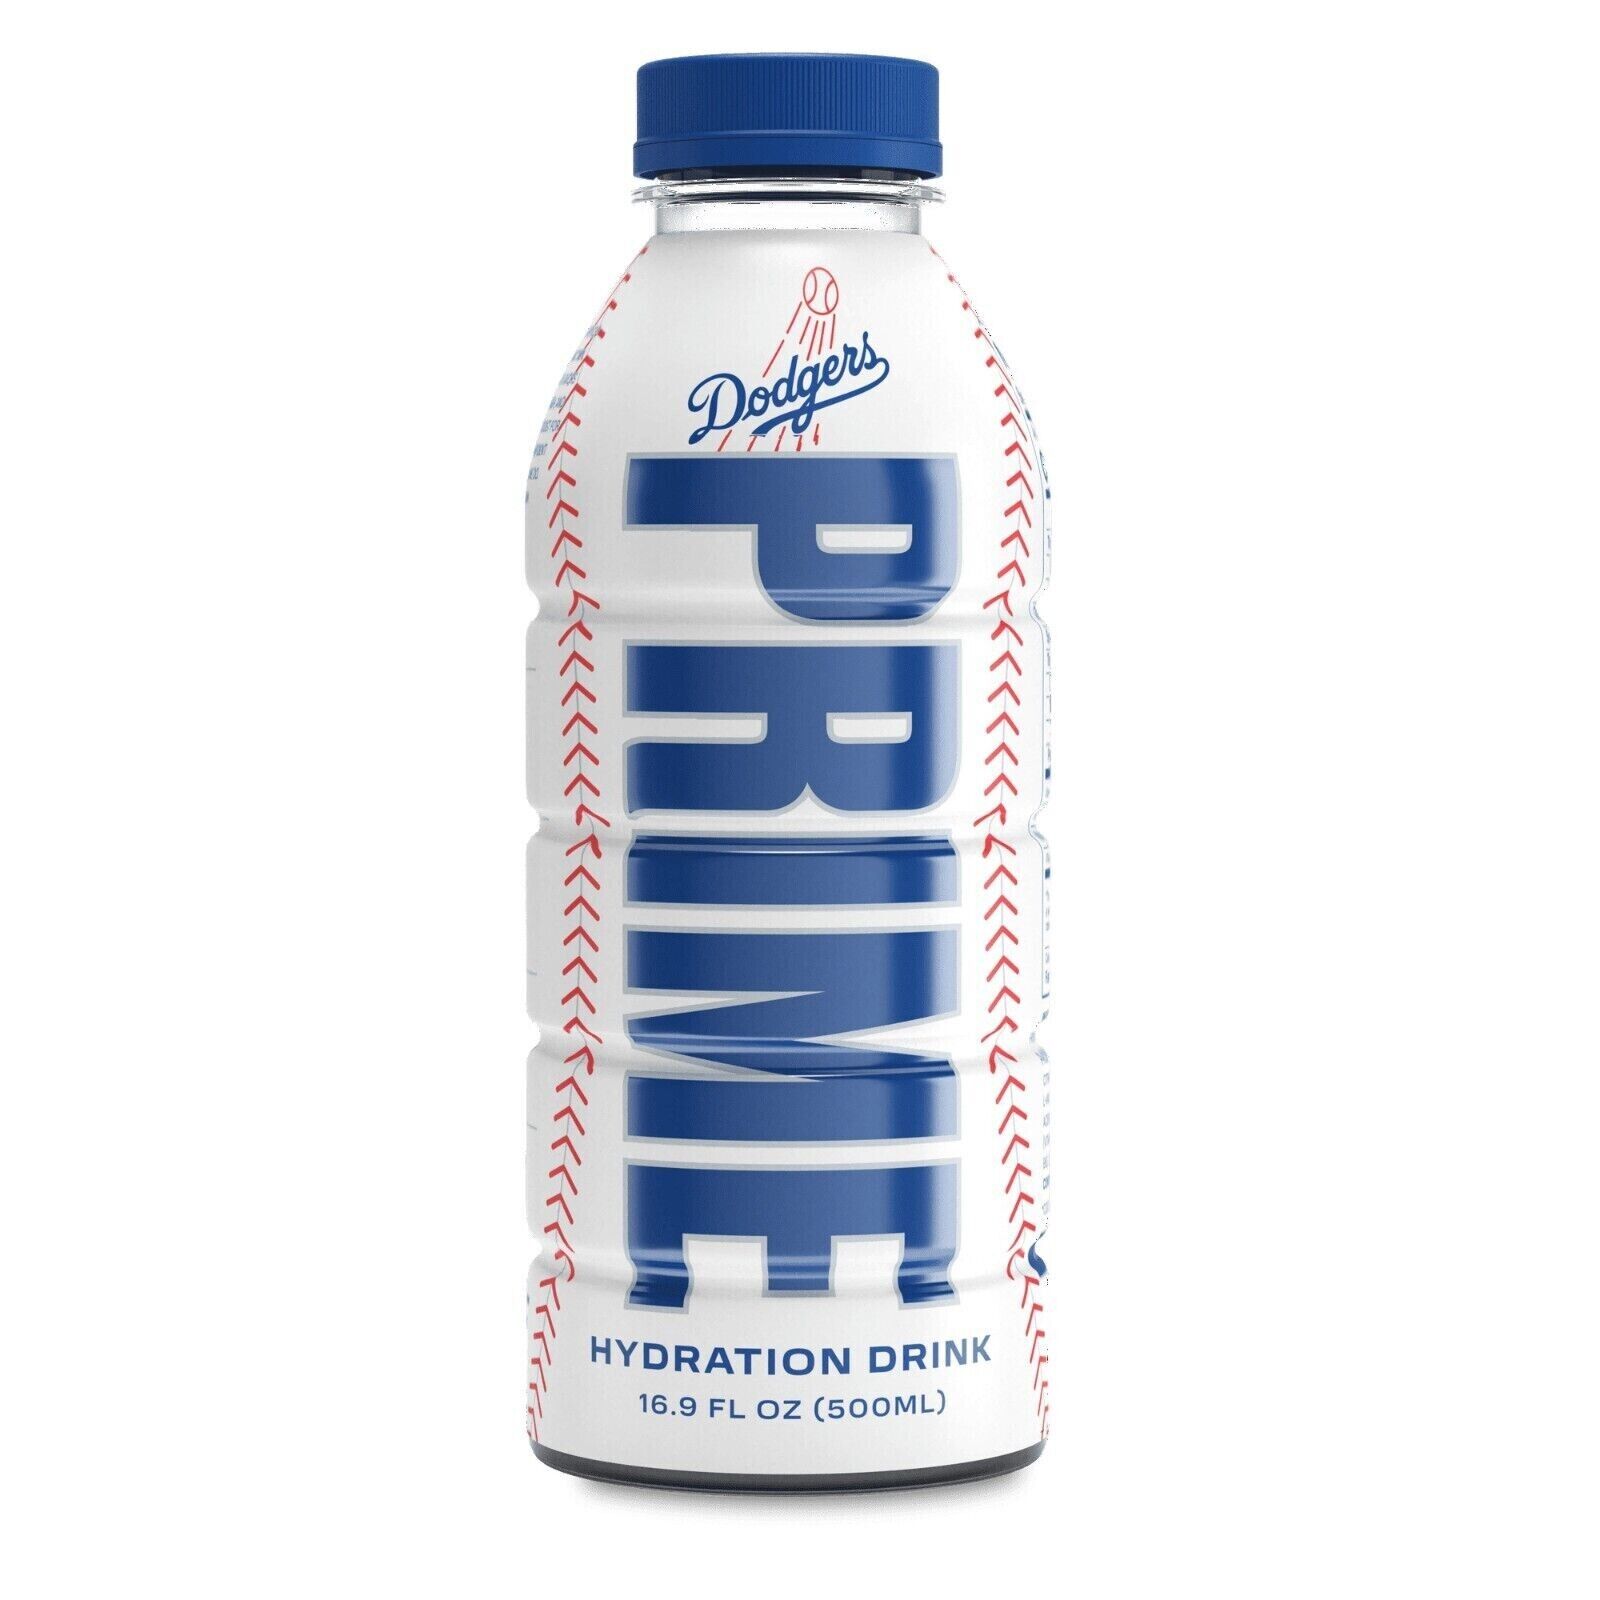 NEW  LIMITED Prime Hydration Limited Edition LA DODGERS 16.9 FL OZ BOTTLE